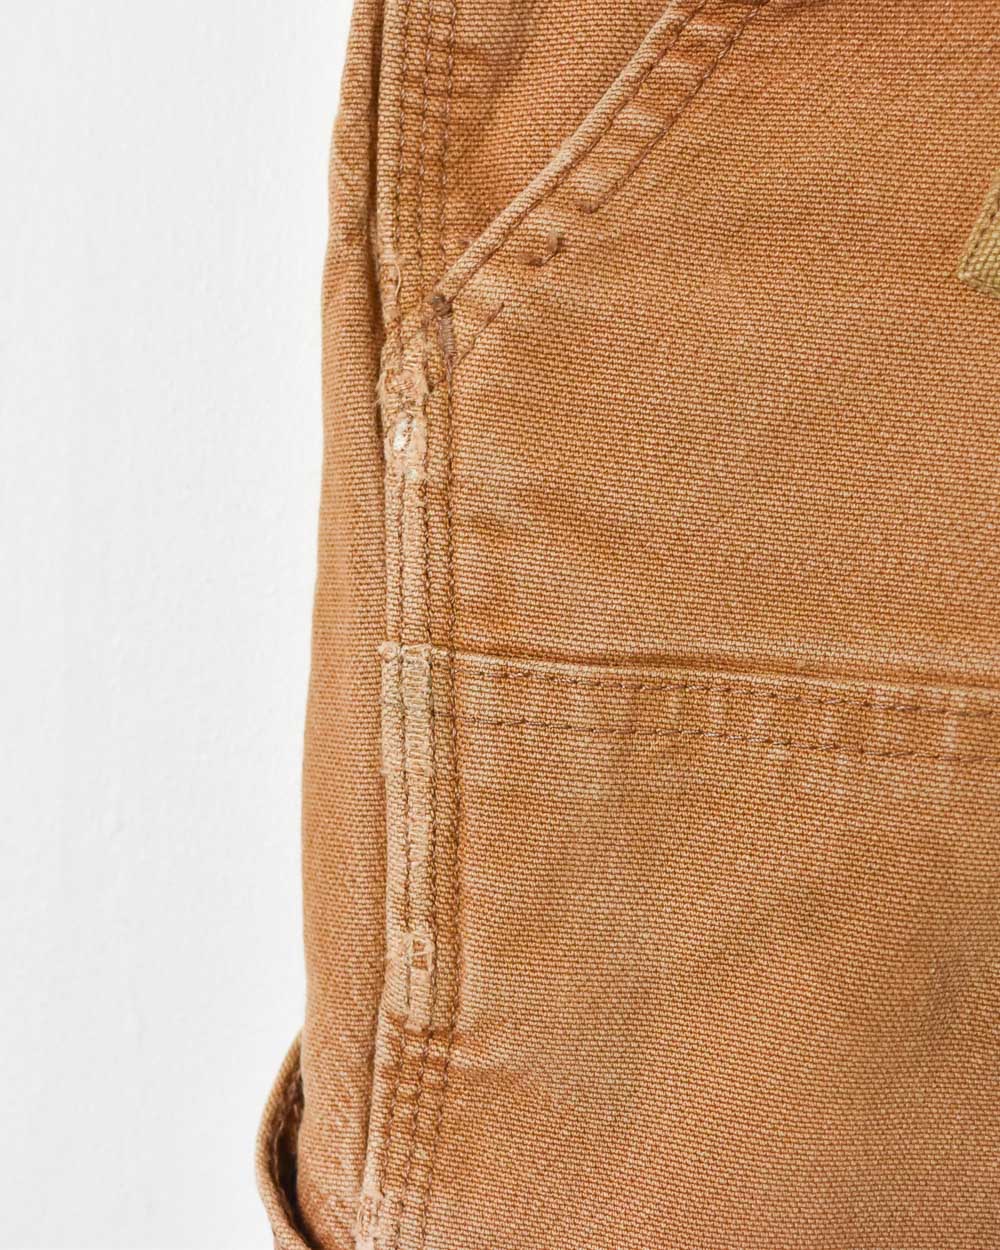 Brown Carhartt Double Knee Carpenter Jeans - W34 L31